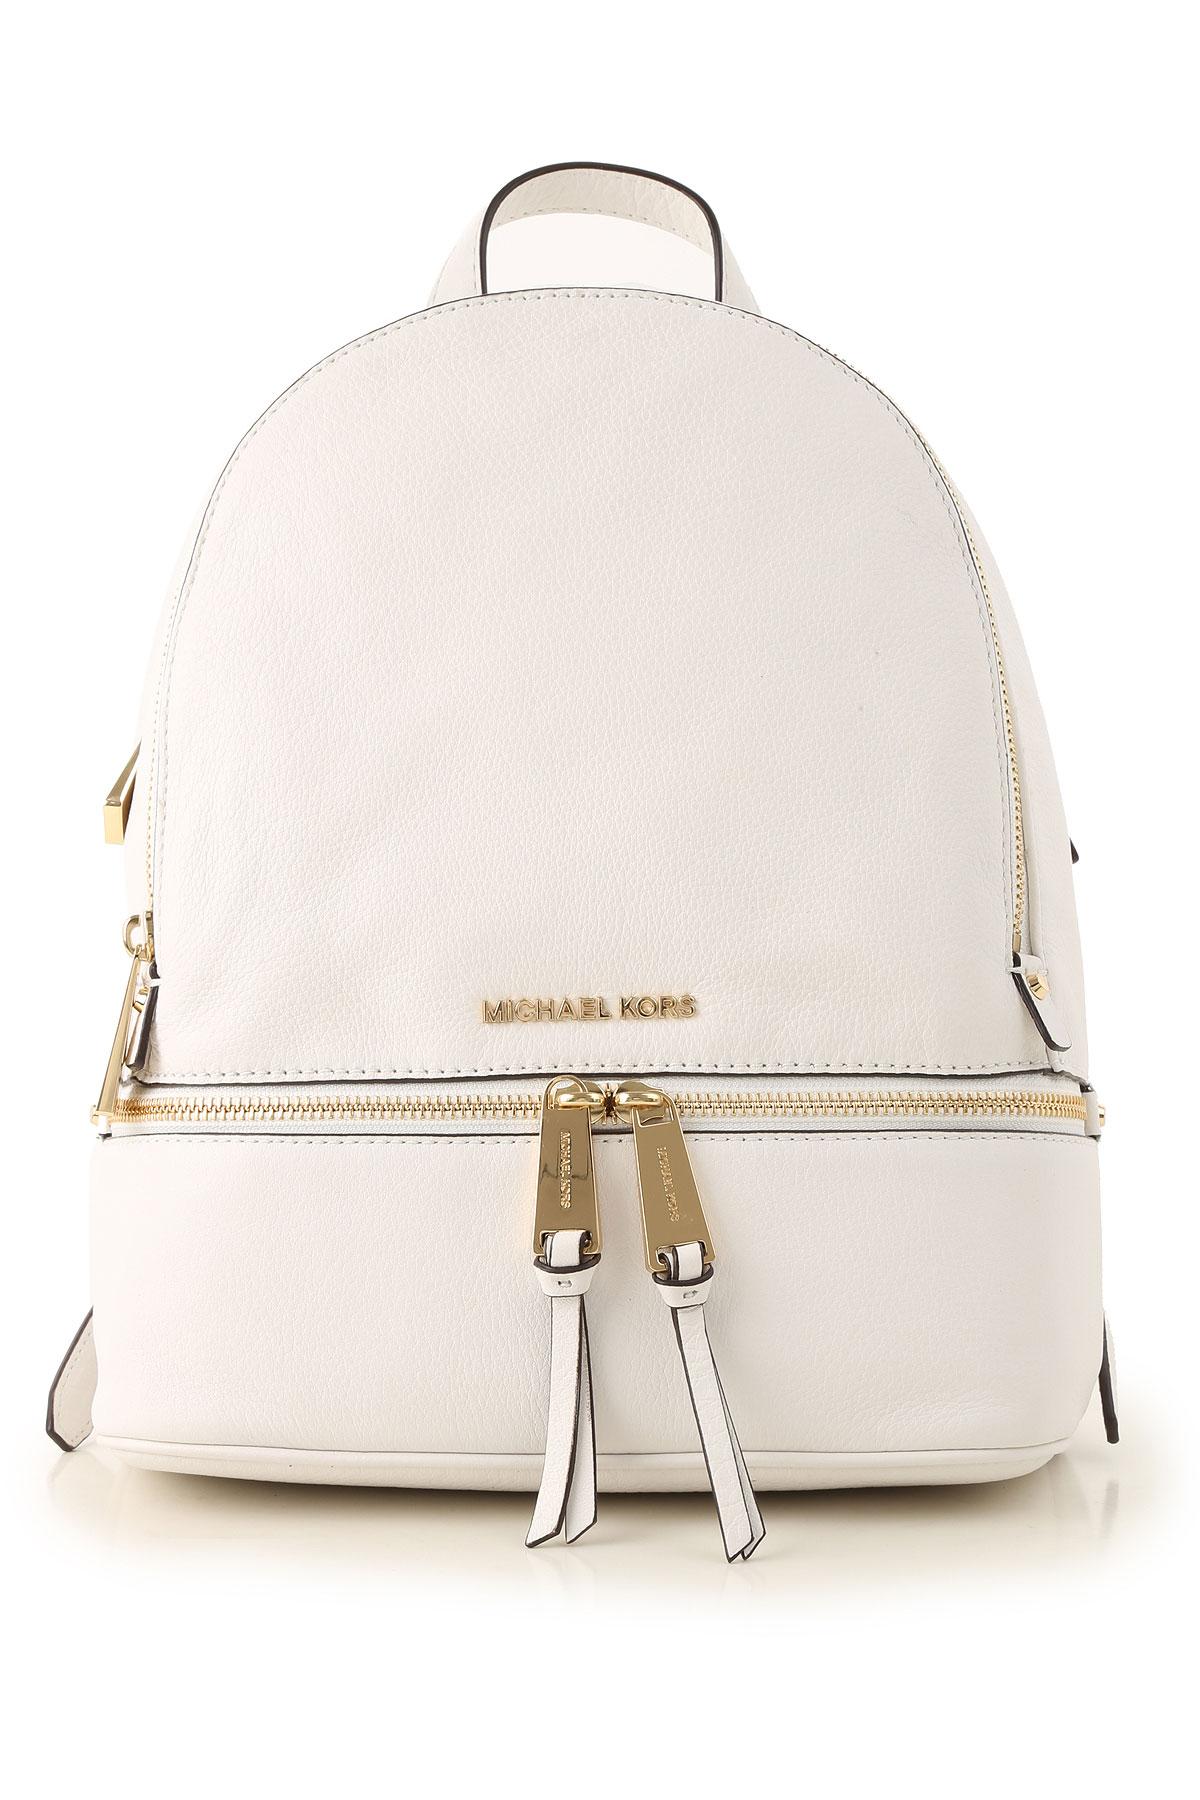 michael kors women's backpack sale